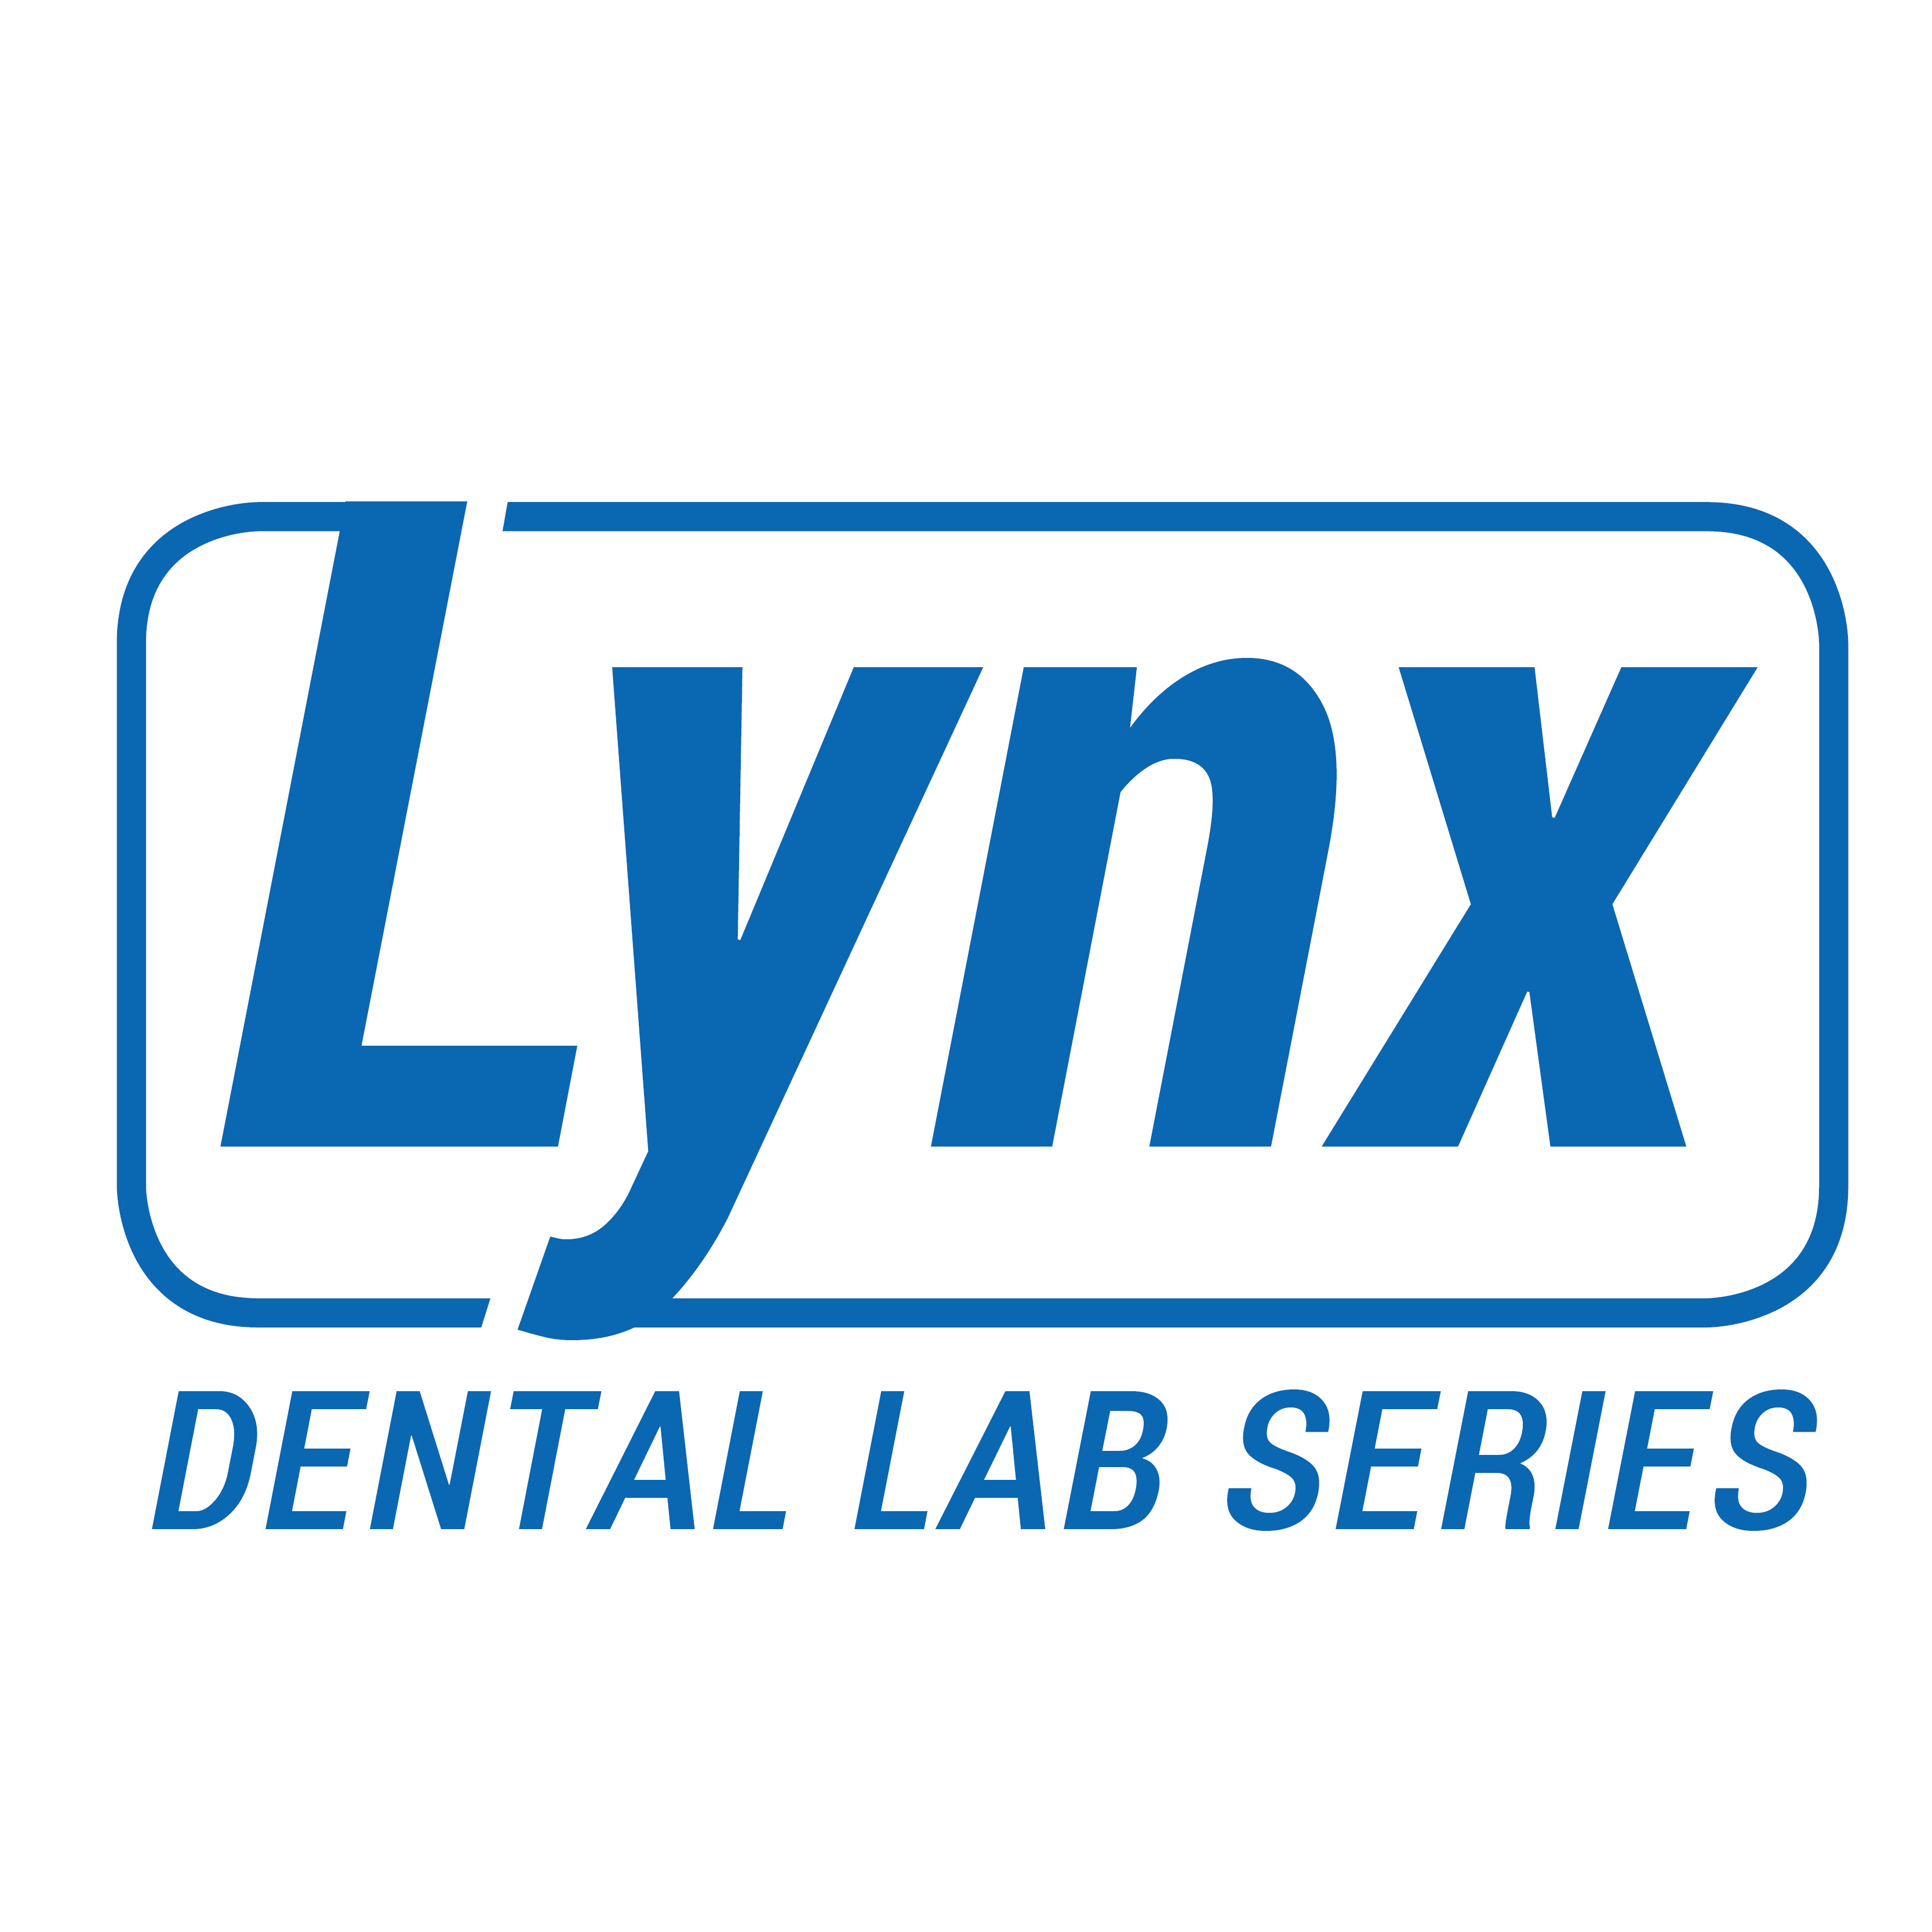 Lynx Dental Lab Series by MTI Dental (MTI Precision Products, LLC.), a Division of CNC Manufacturing, Inc.